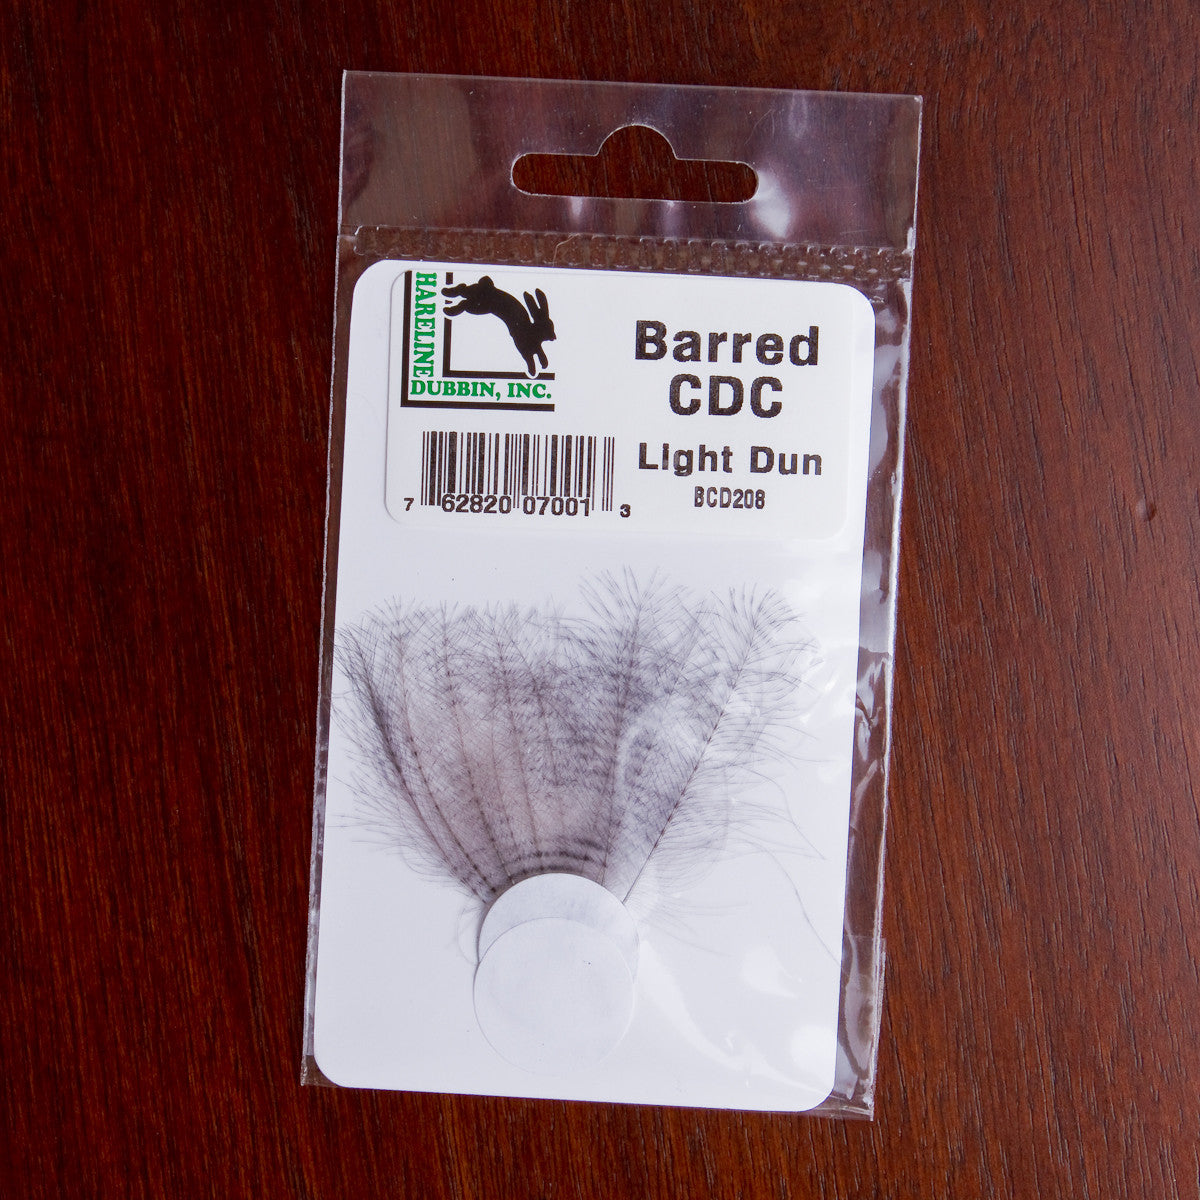 Barred CDC - Light Dun